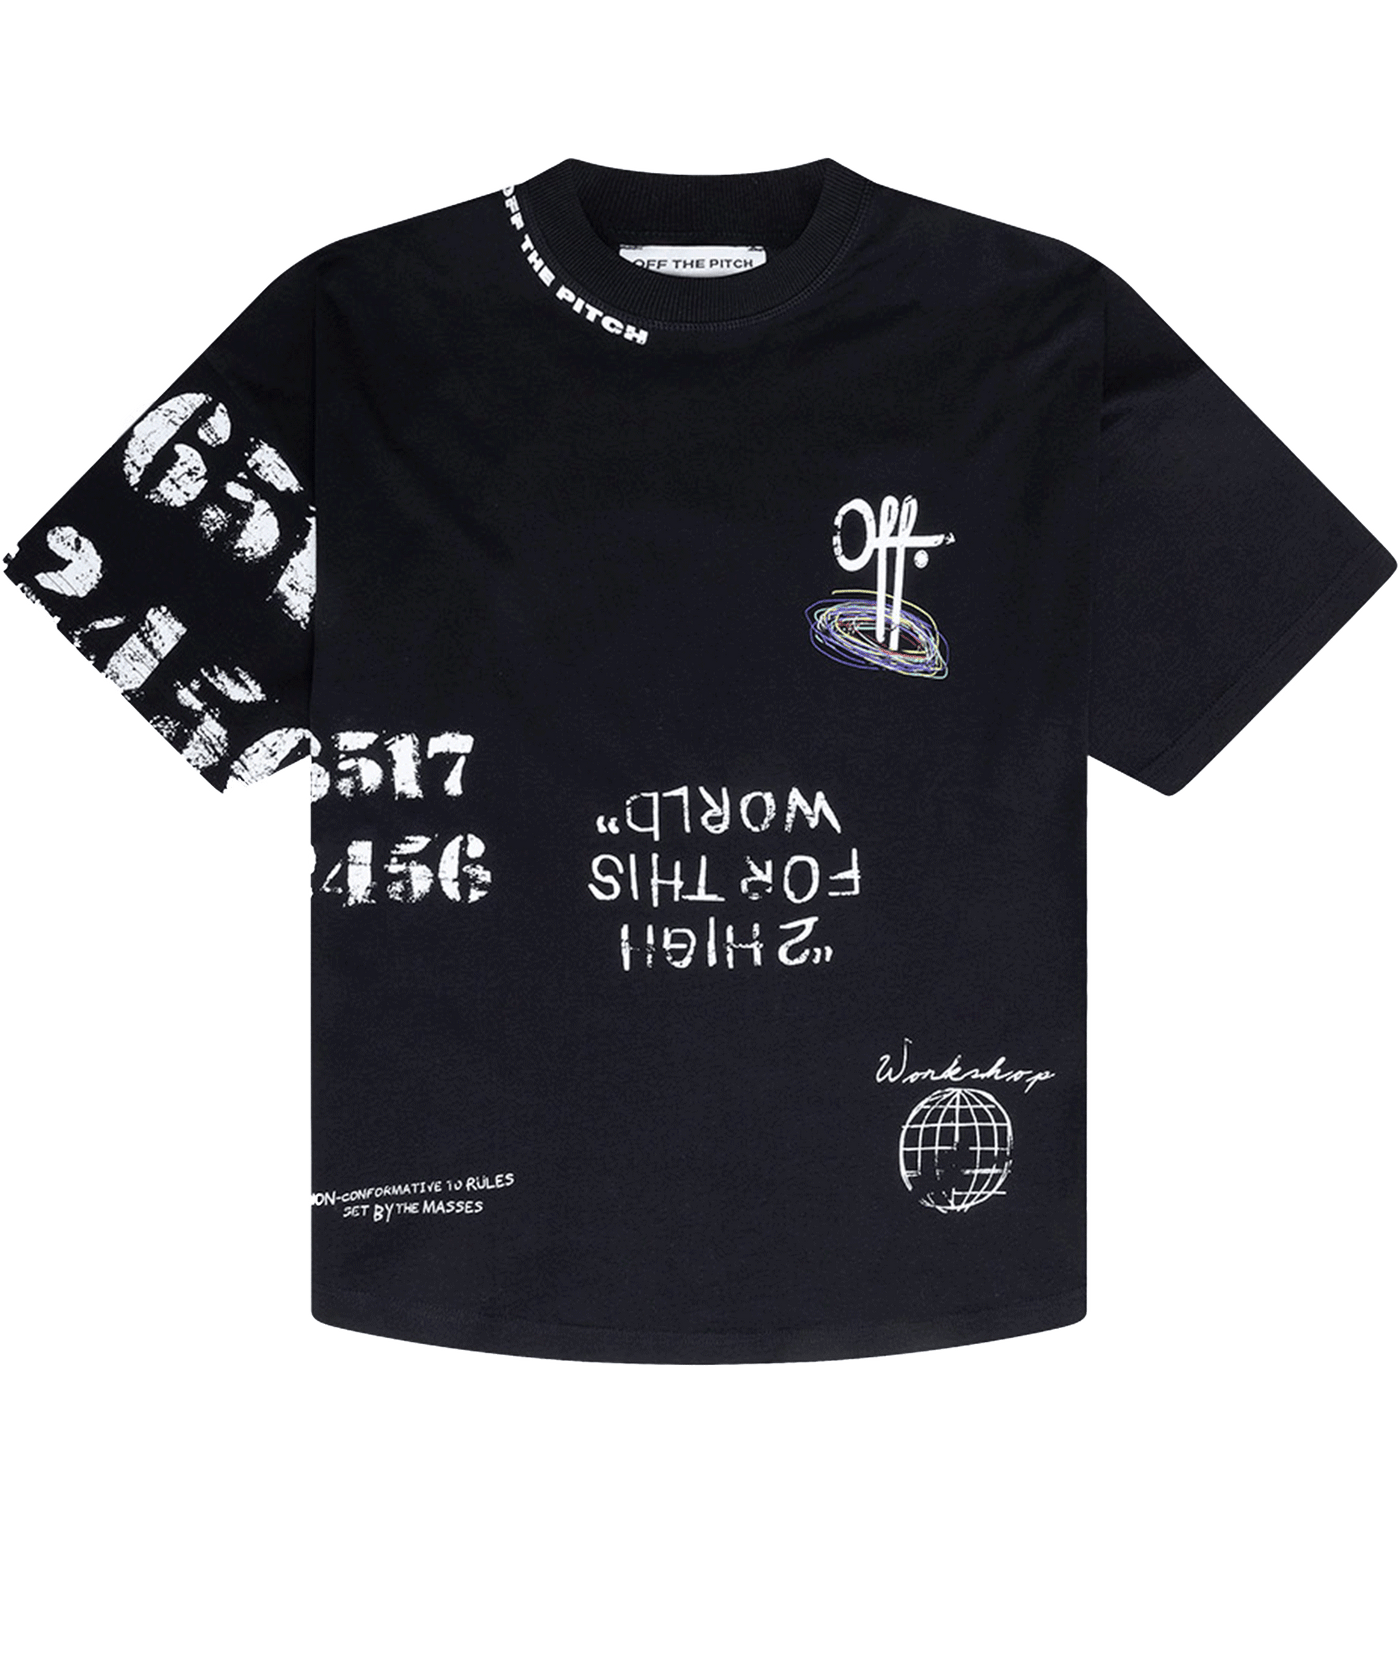 Off The Pitch - Otp233012 - Chalk T-shirt - 998 Black